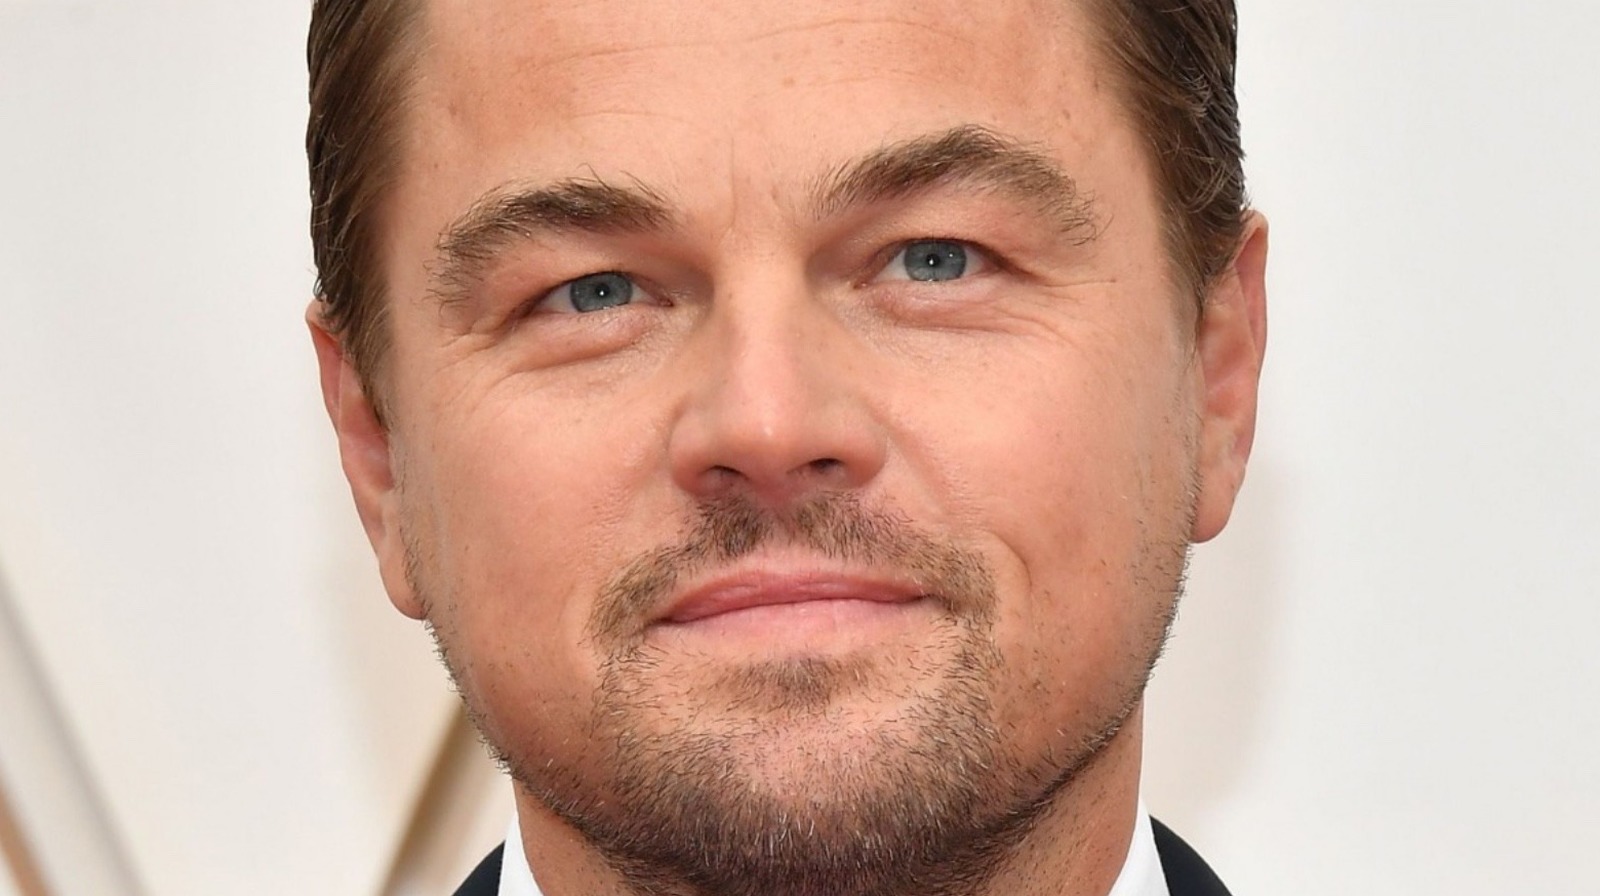 Even Leonardo DiCaprio has starred in a few stinkers